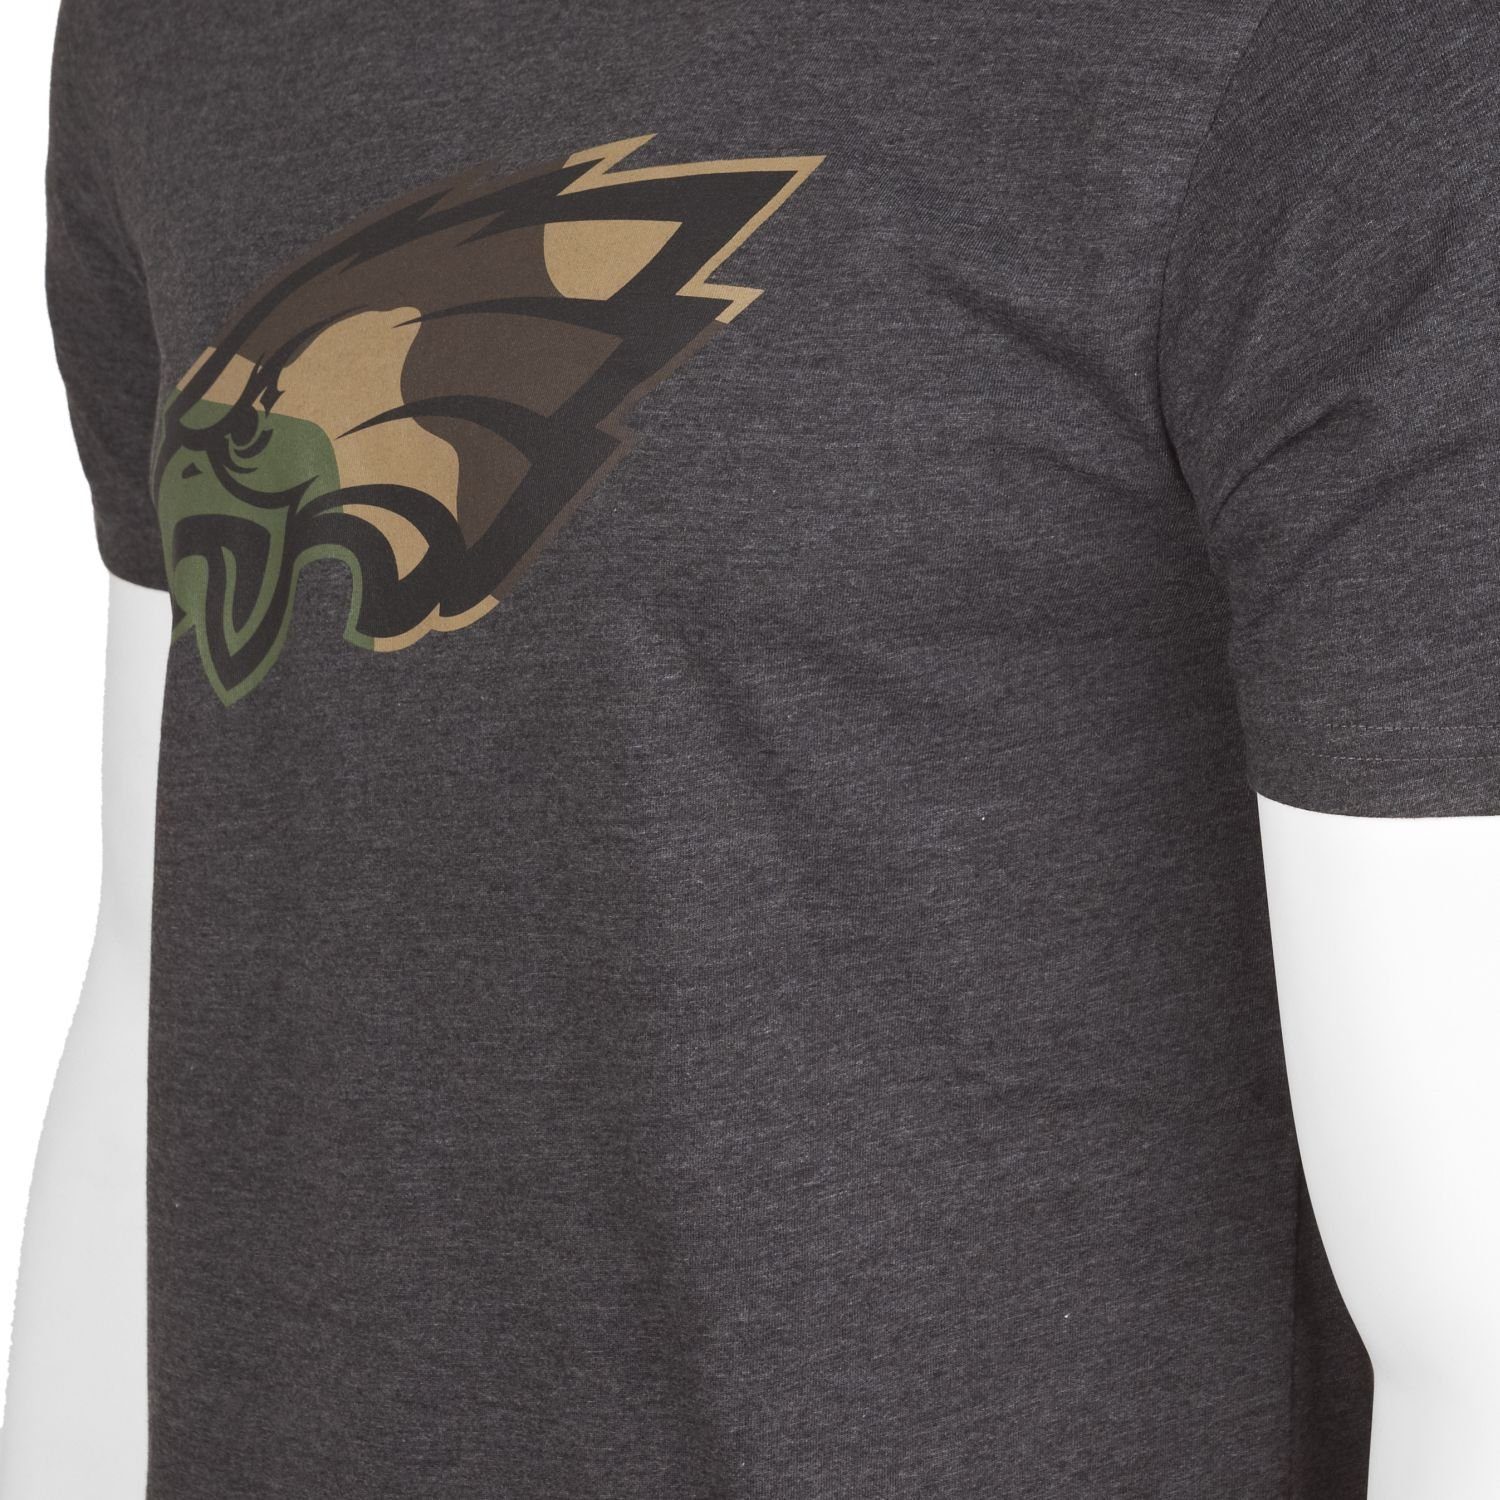 Logo Philadelphia Team Print-Shirt Era charcoal NFL Eagles New